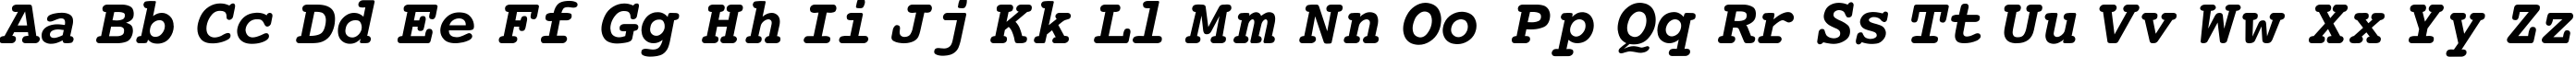 Пример написания английского алфавита шрифтом Courier-Bold-Italic